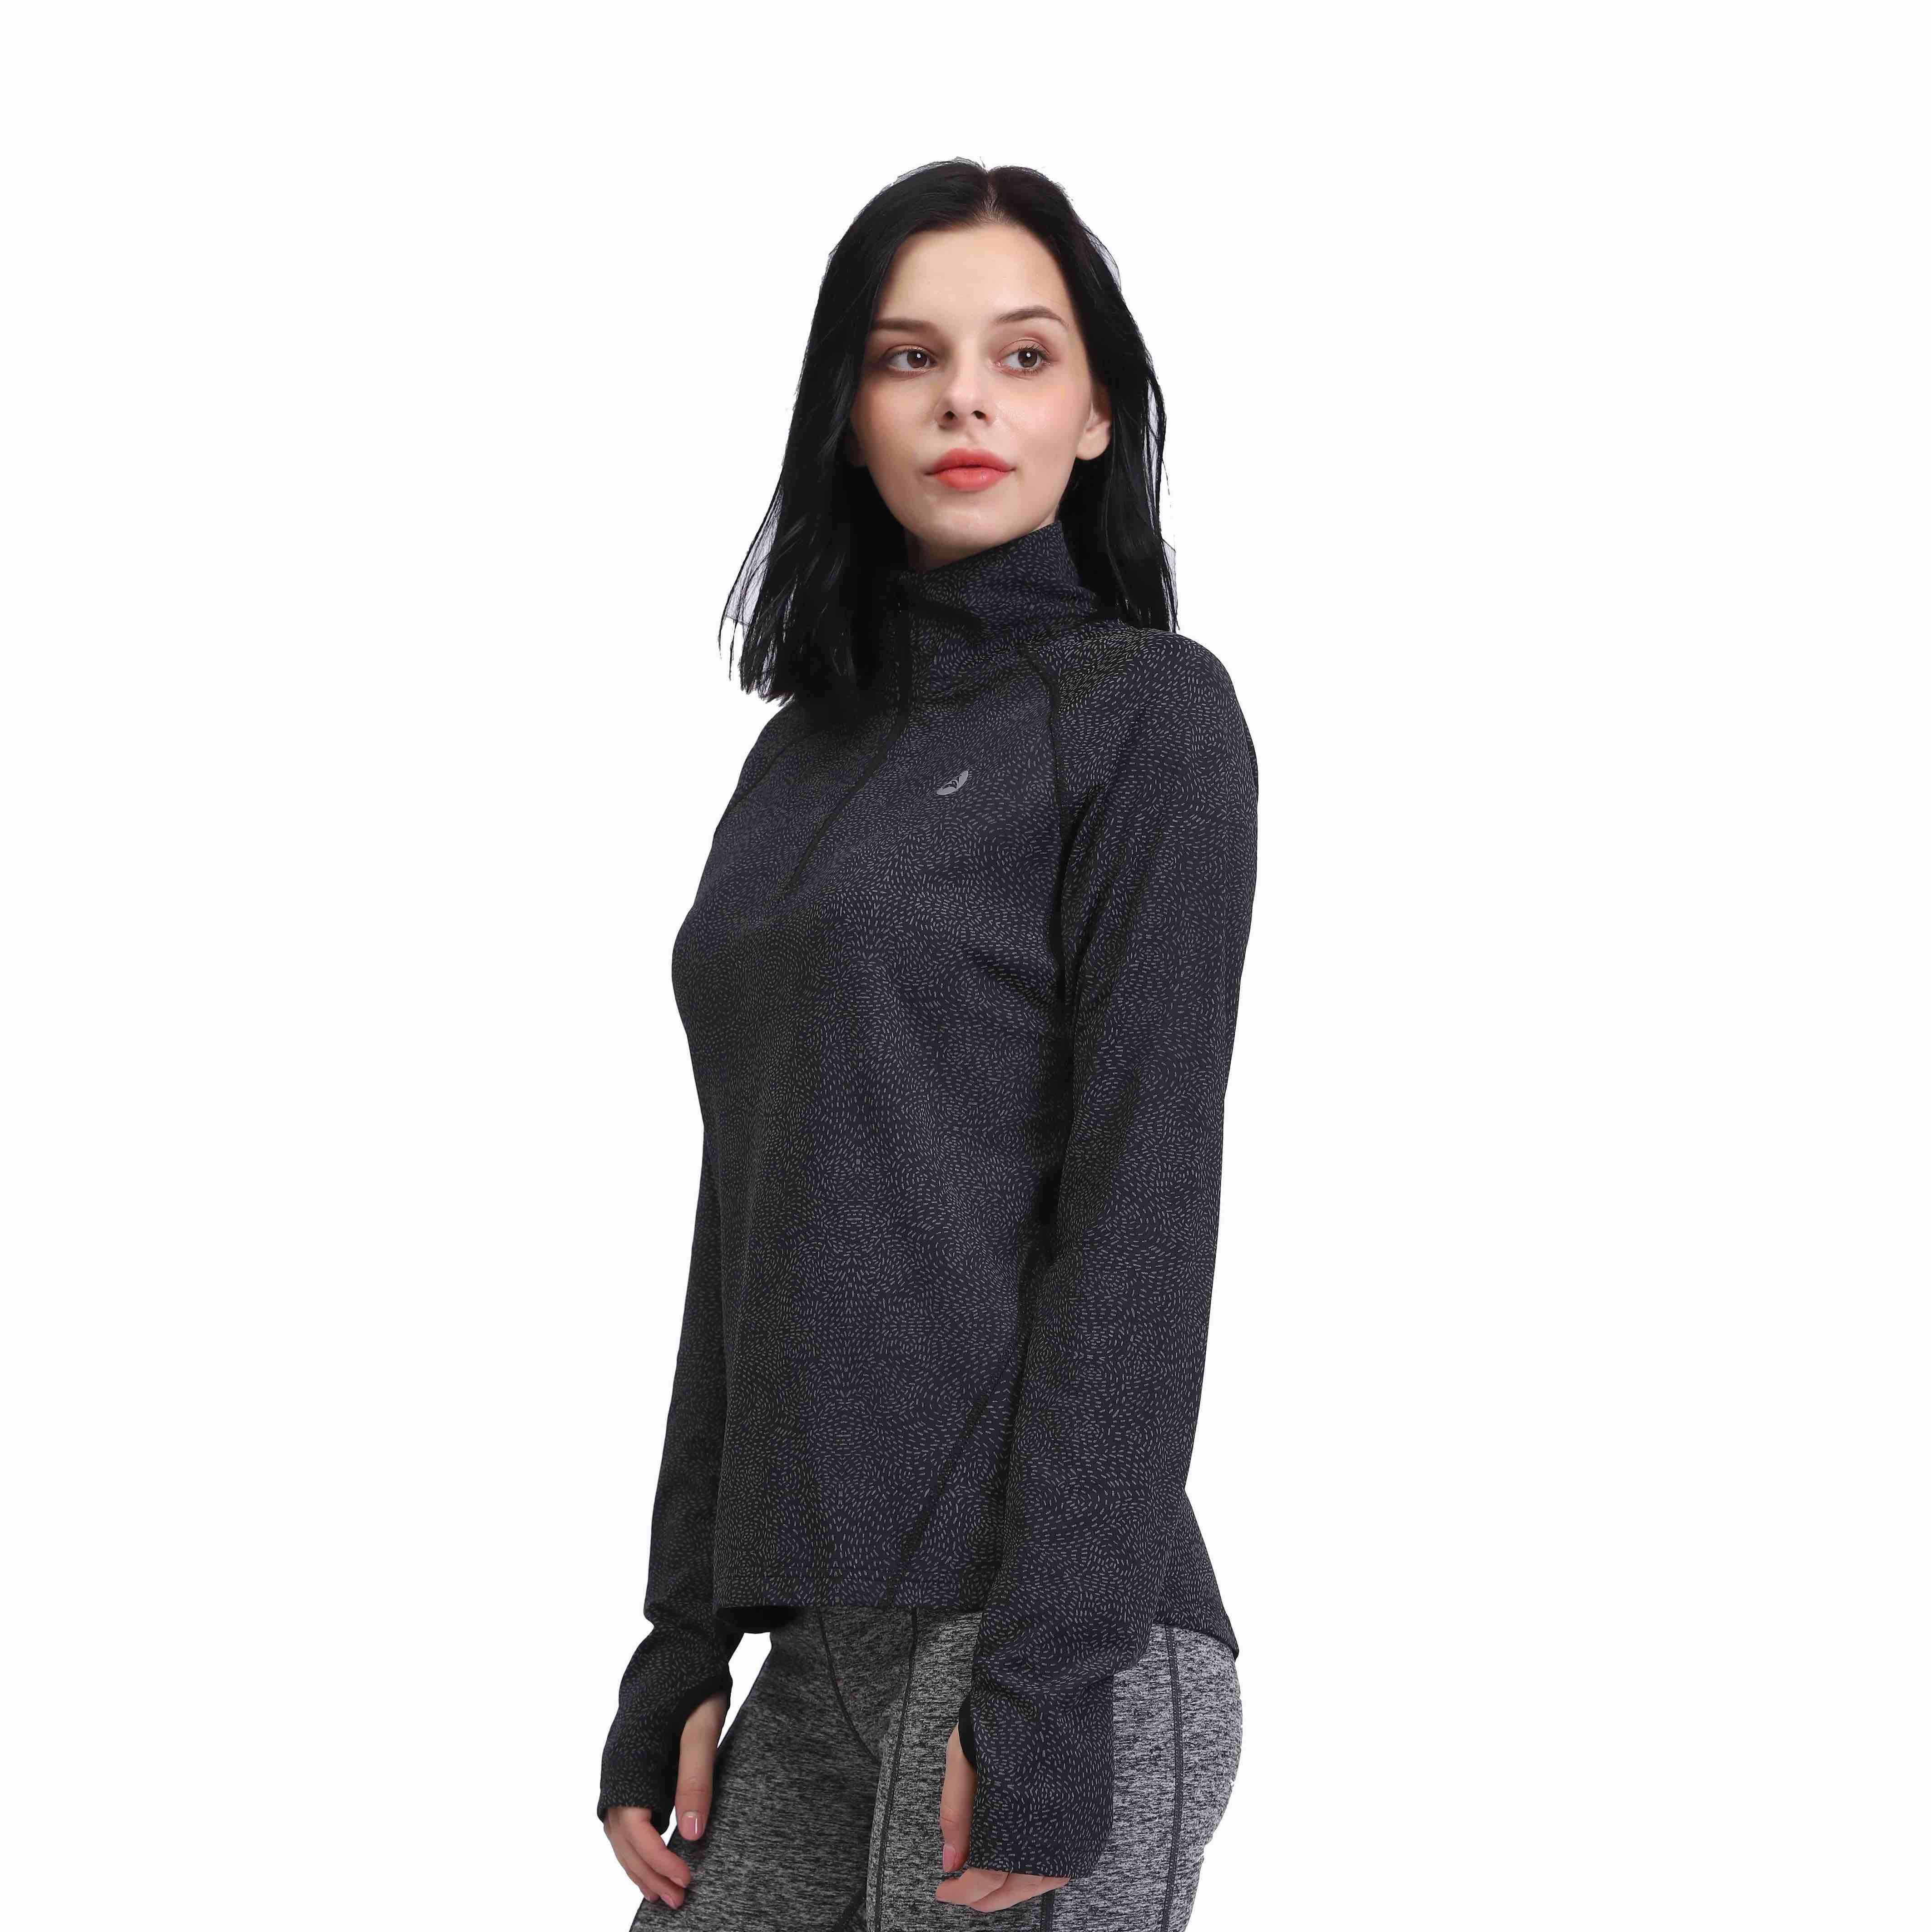 Women's Reflective Print Workout Half-Zip Long Sleeve Top